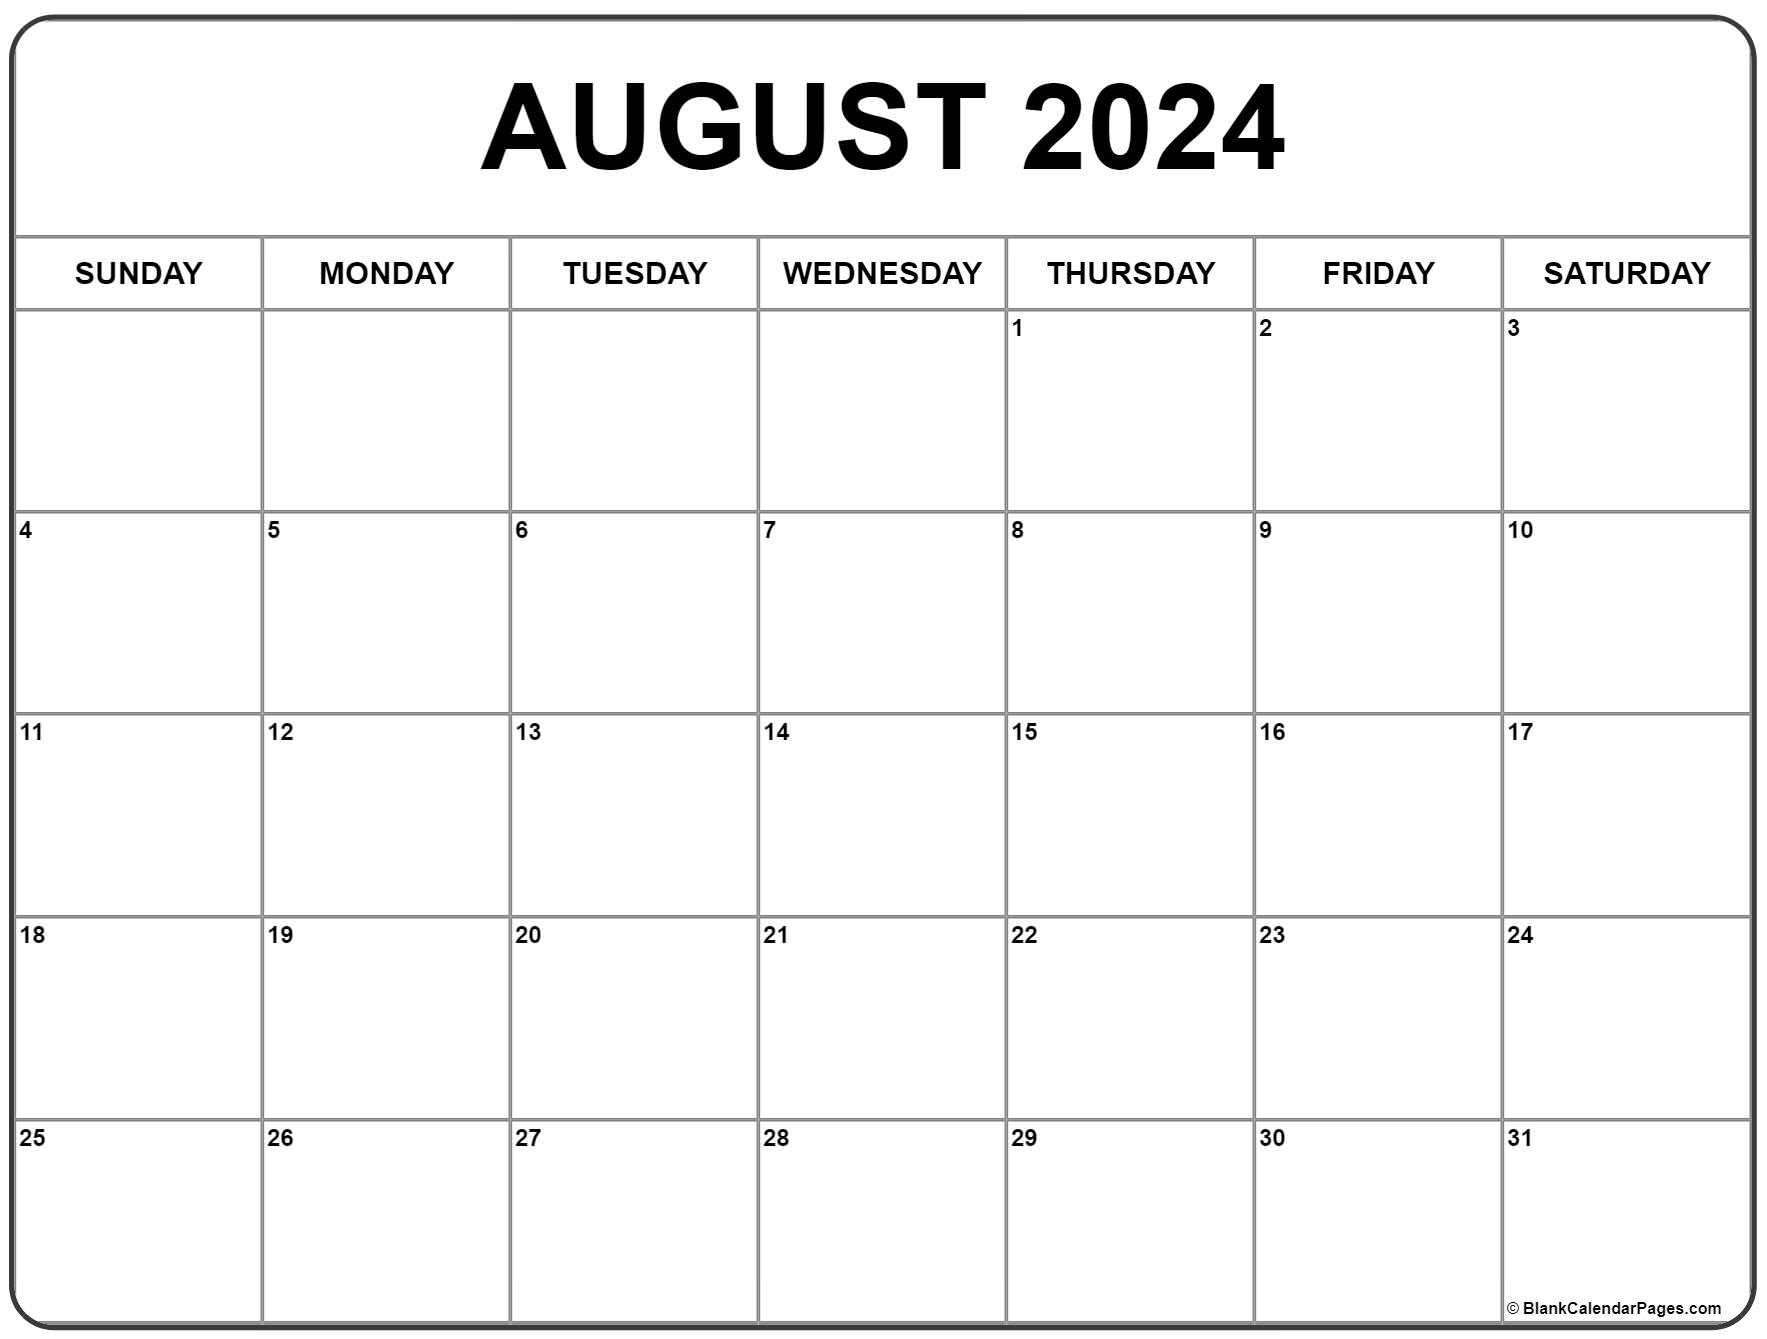 August 2024 Calendar | Free Printable Calendar for Aug 2024 Printable Calendar